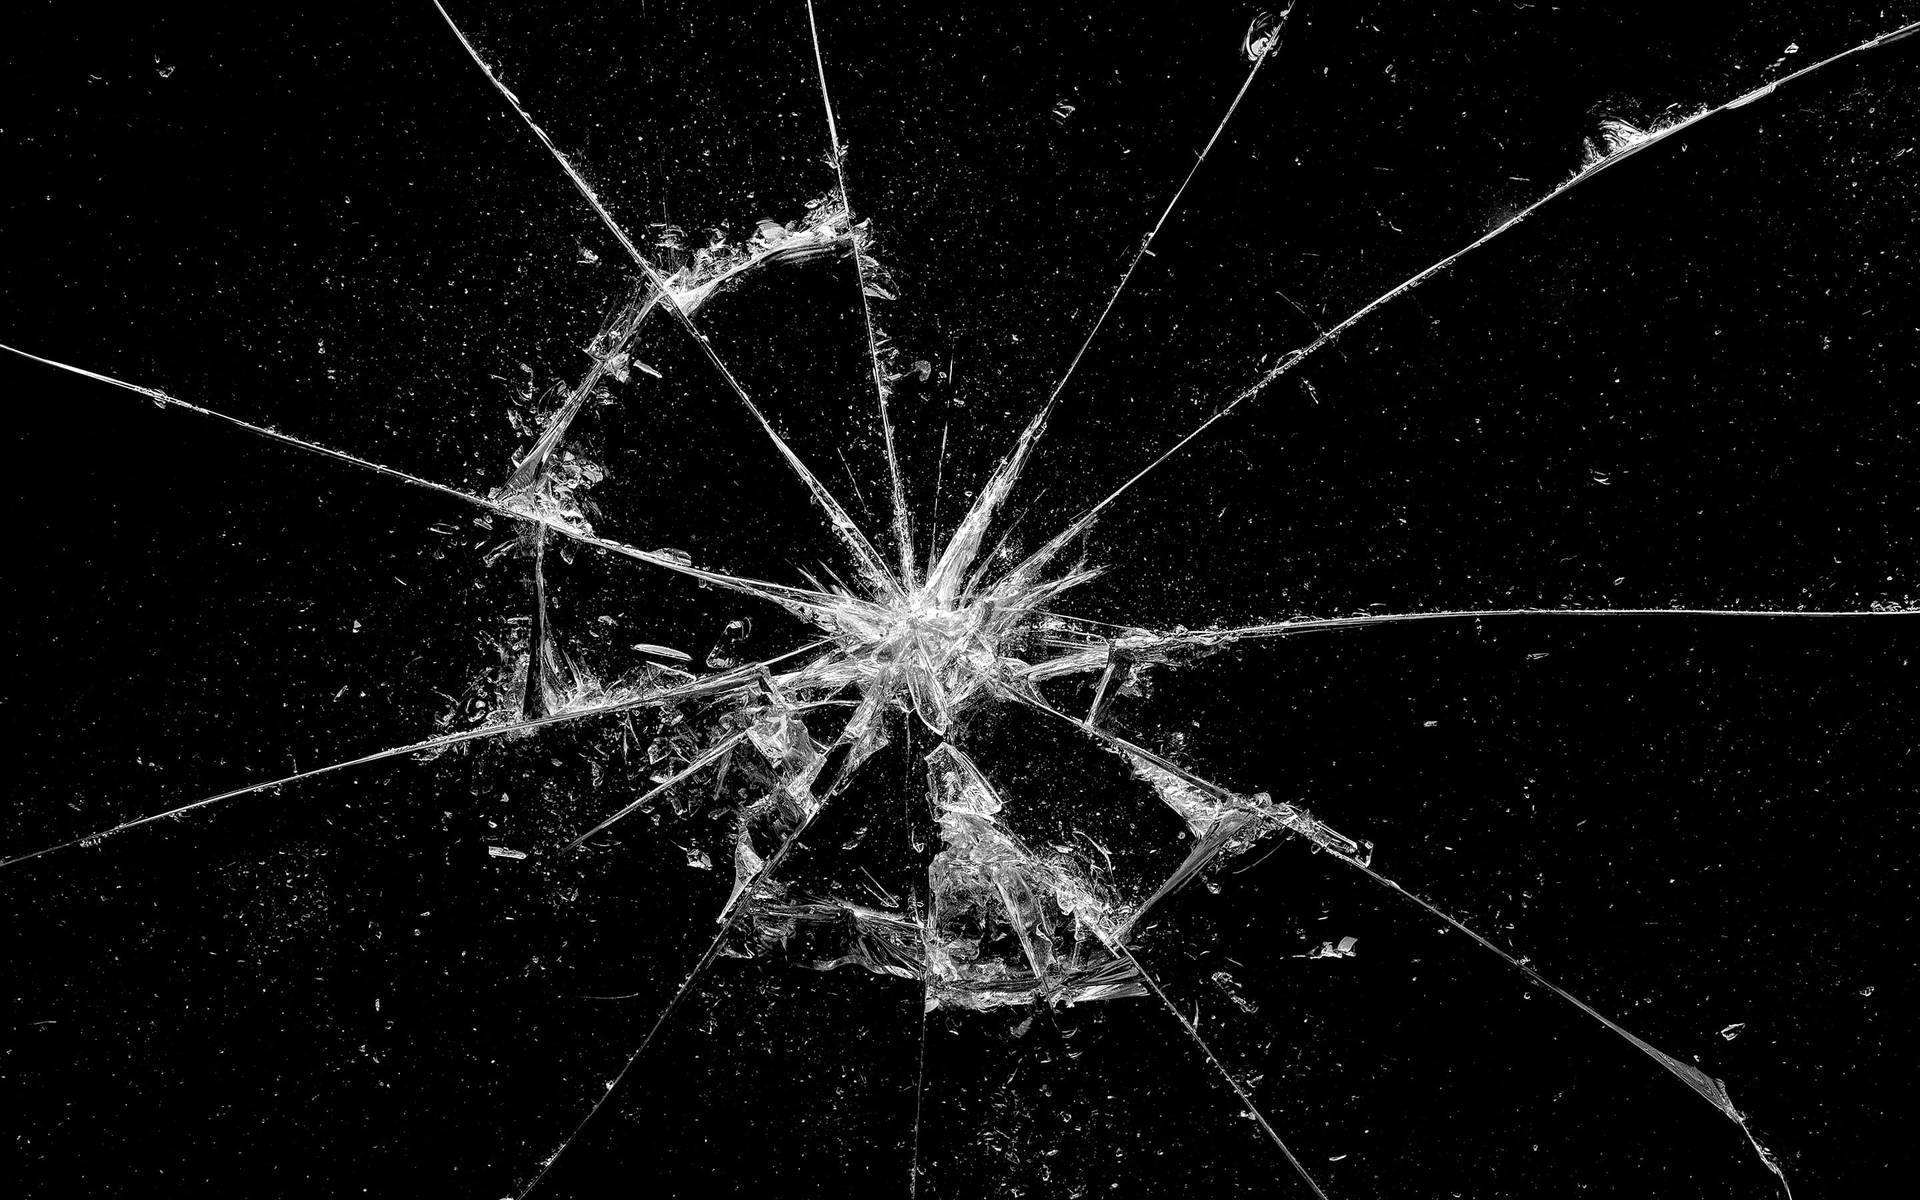 Screen Of Badly Broken Glass